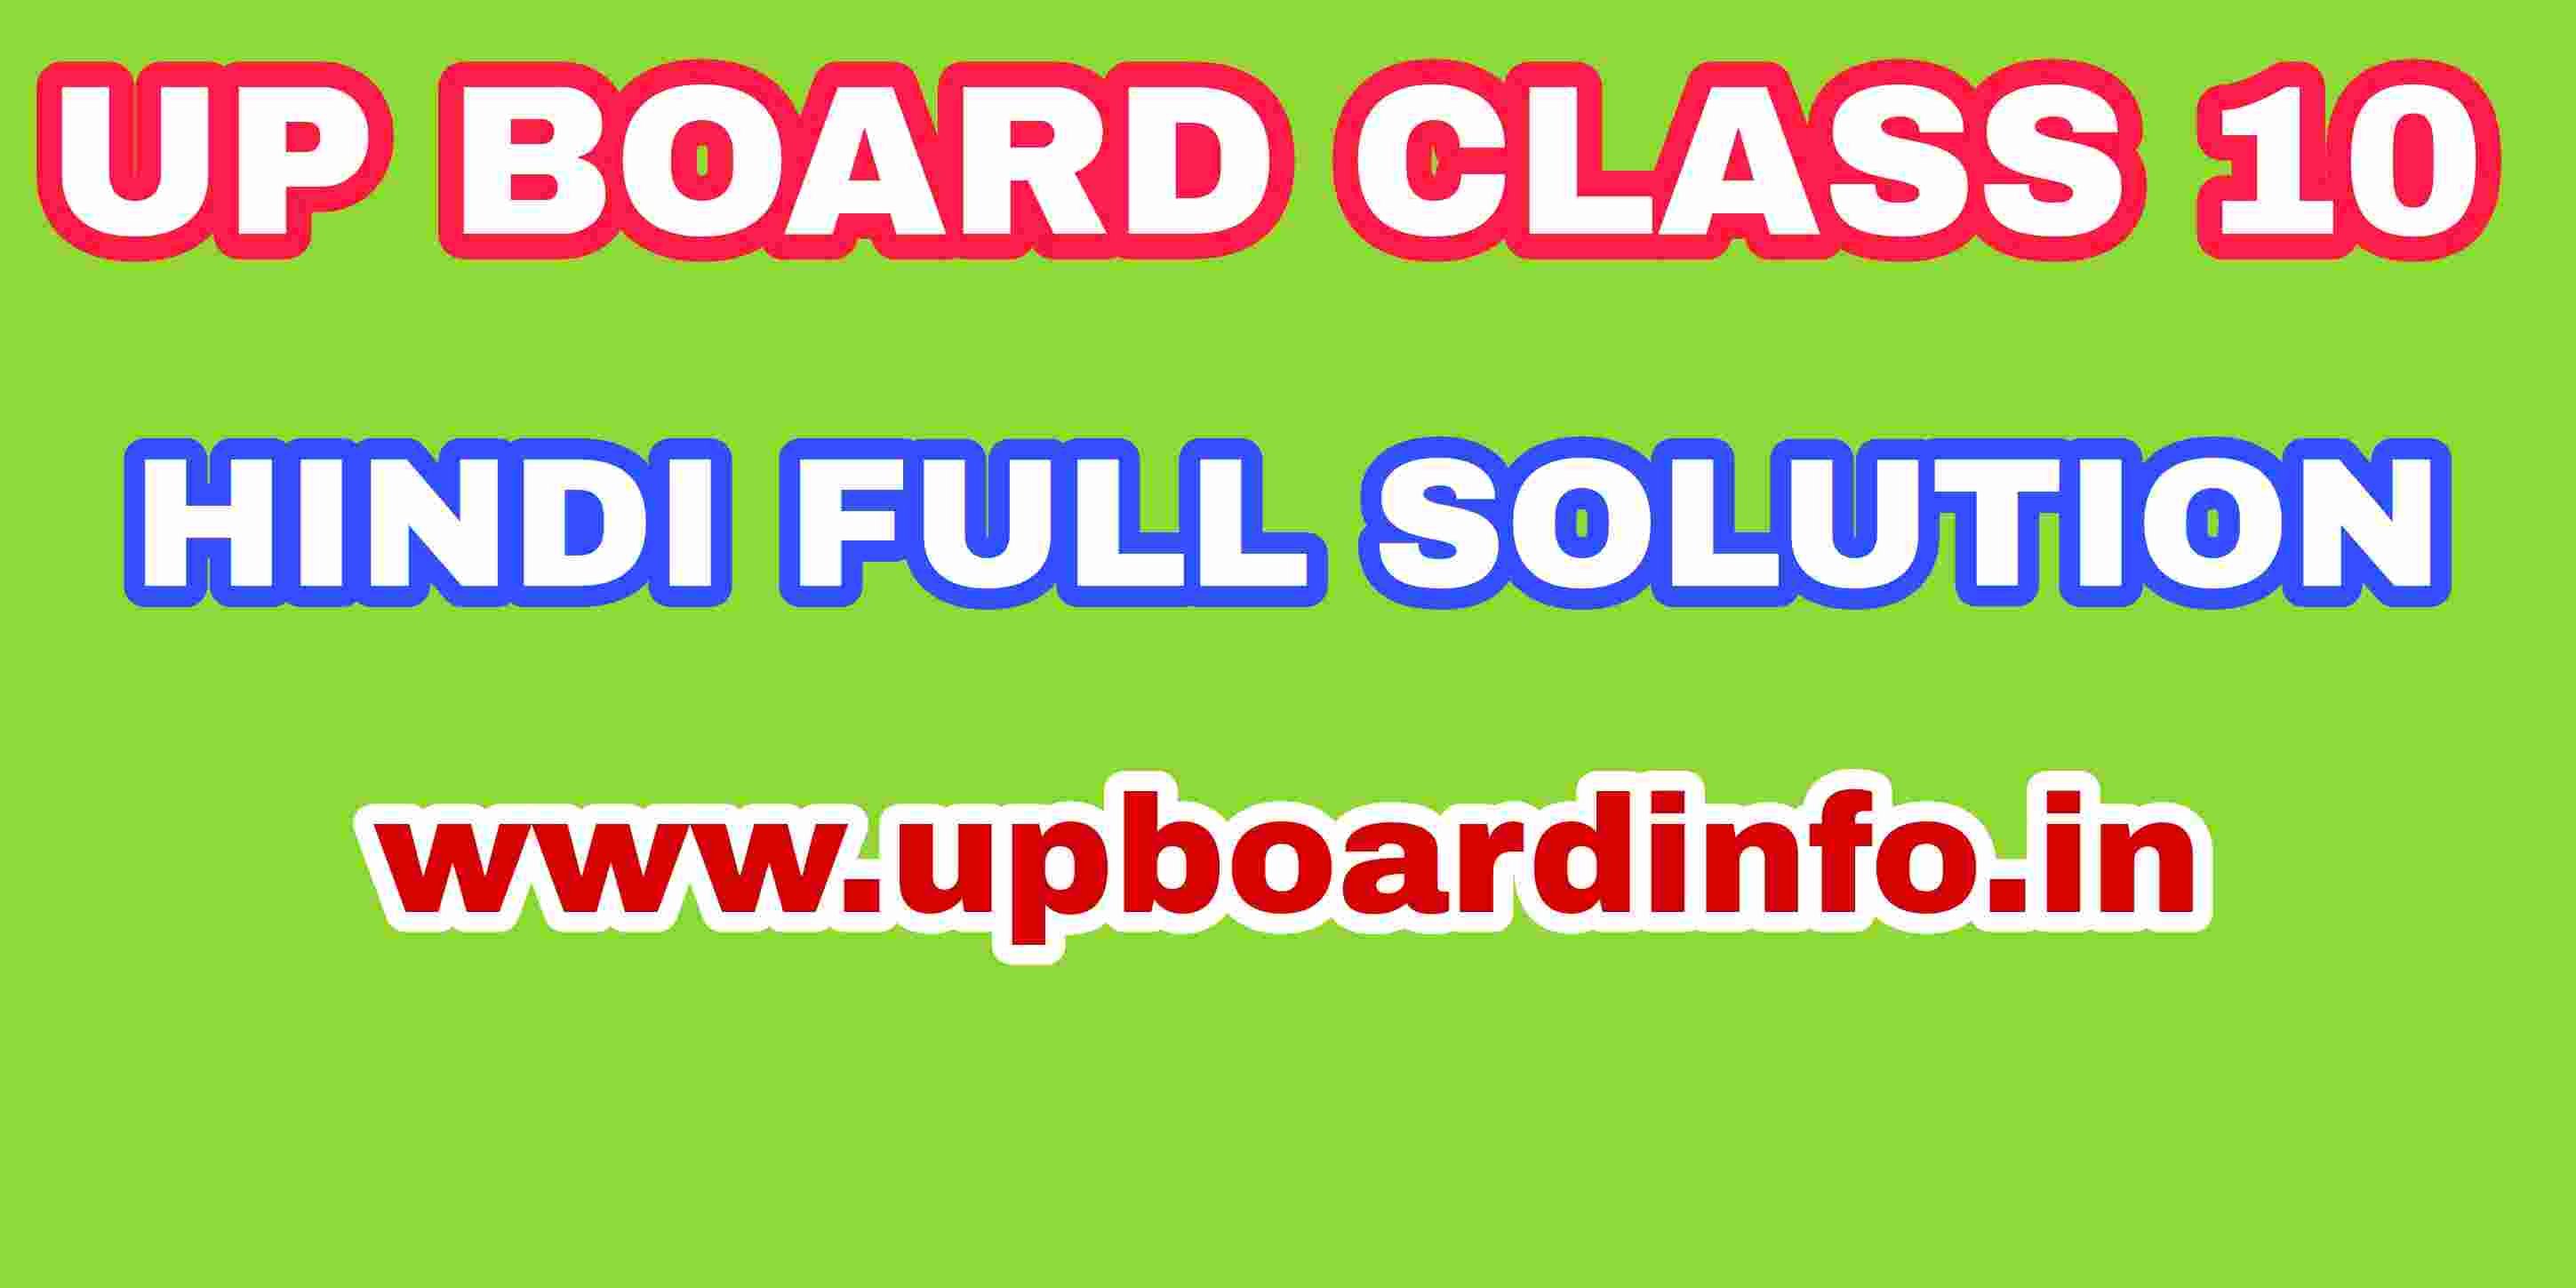 up board class 10 hindi full solution chapter 7 sanskritk khand